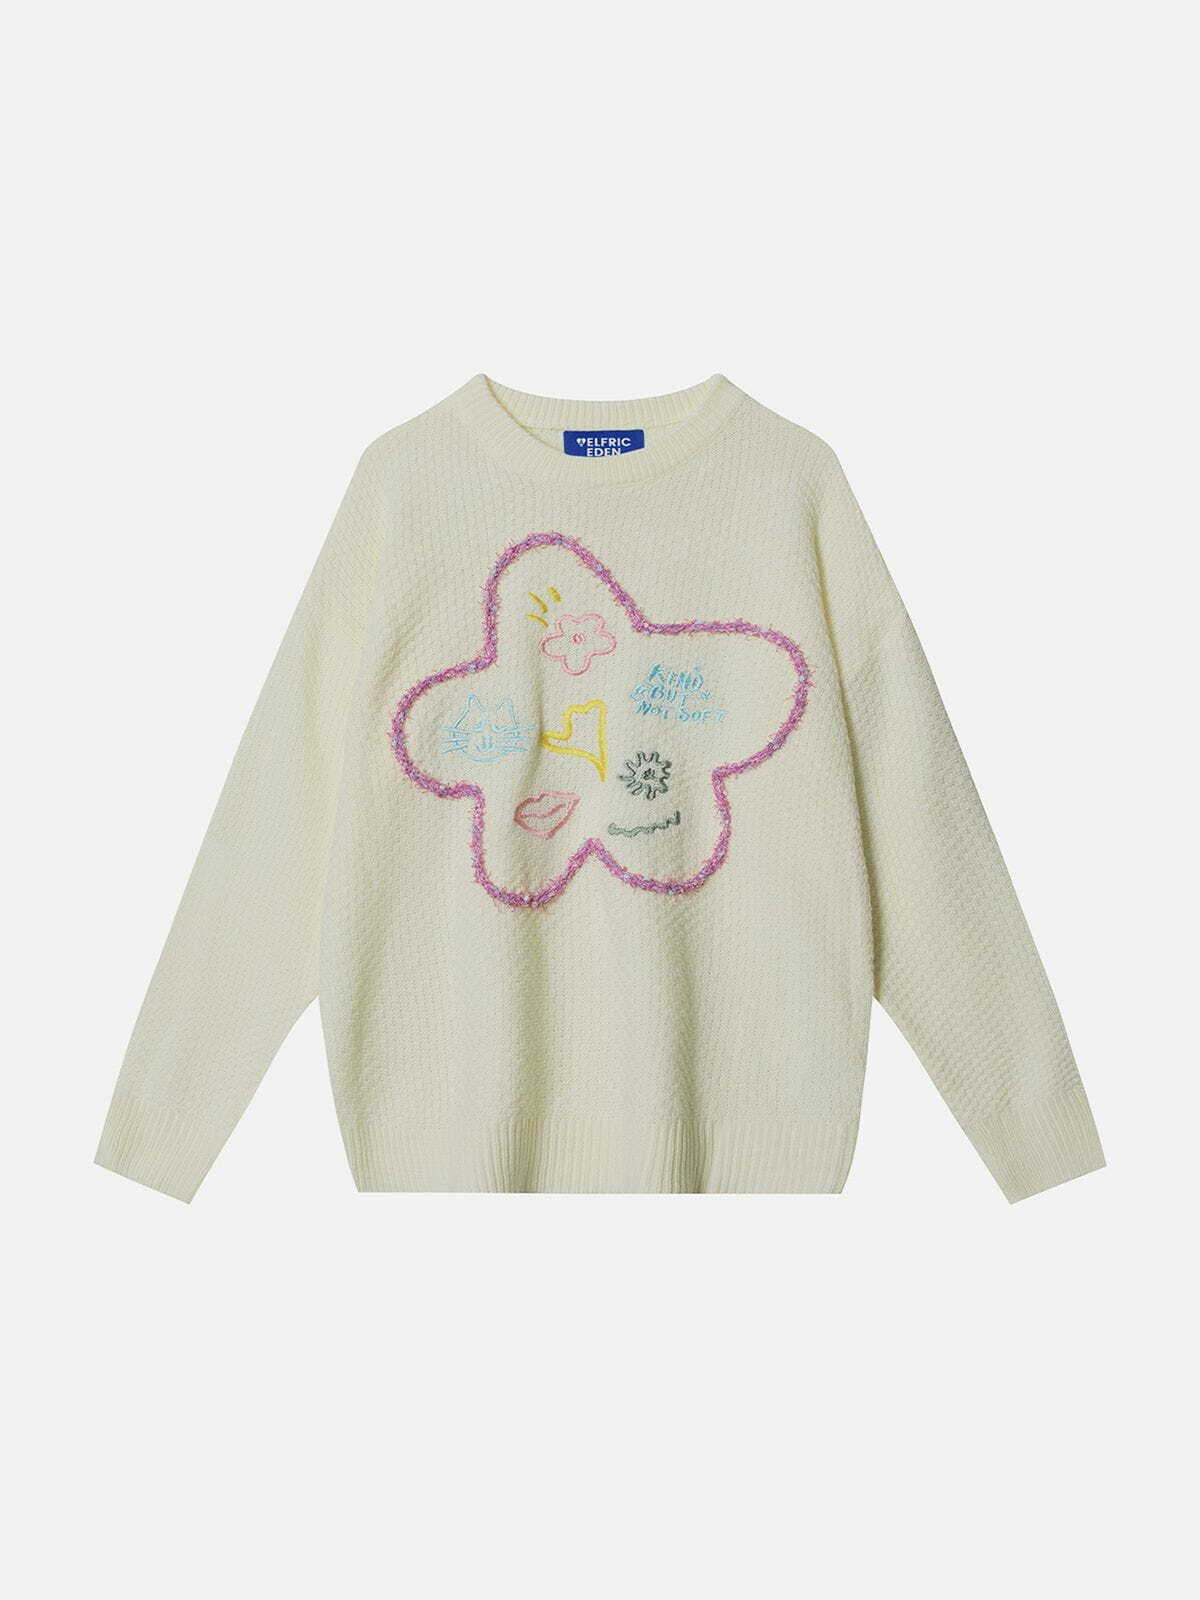 vibrant cartoon embroidery sweater urban chic 4884